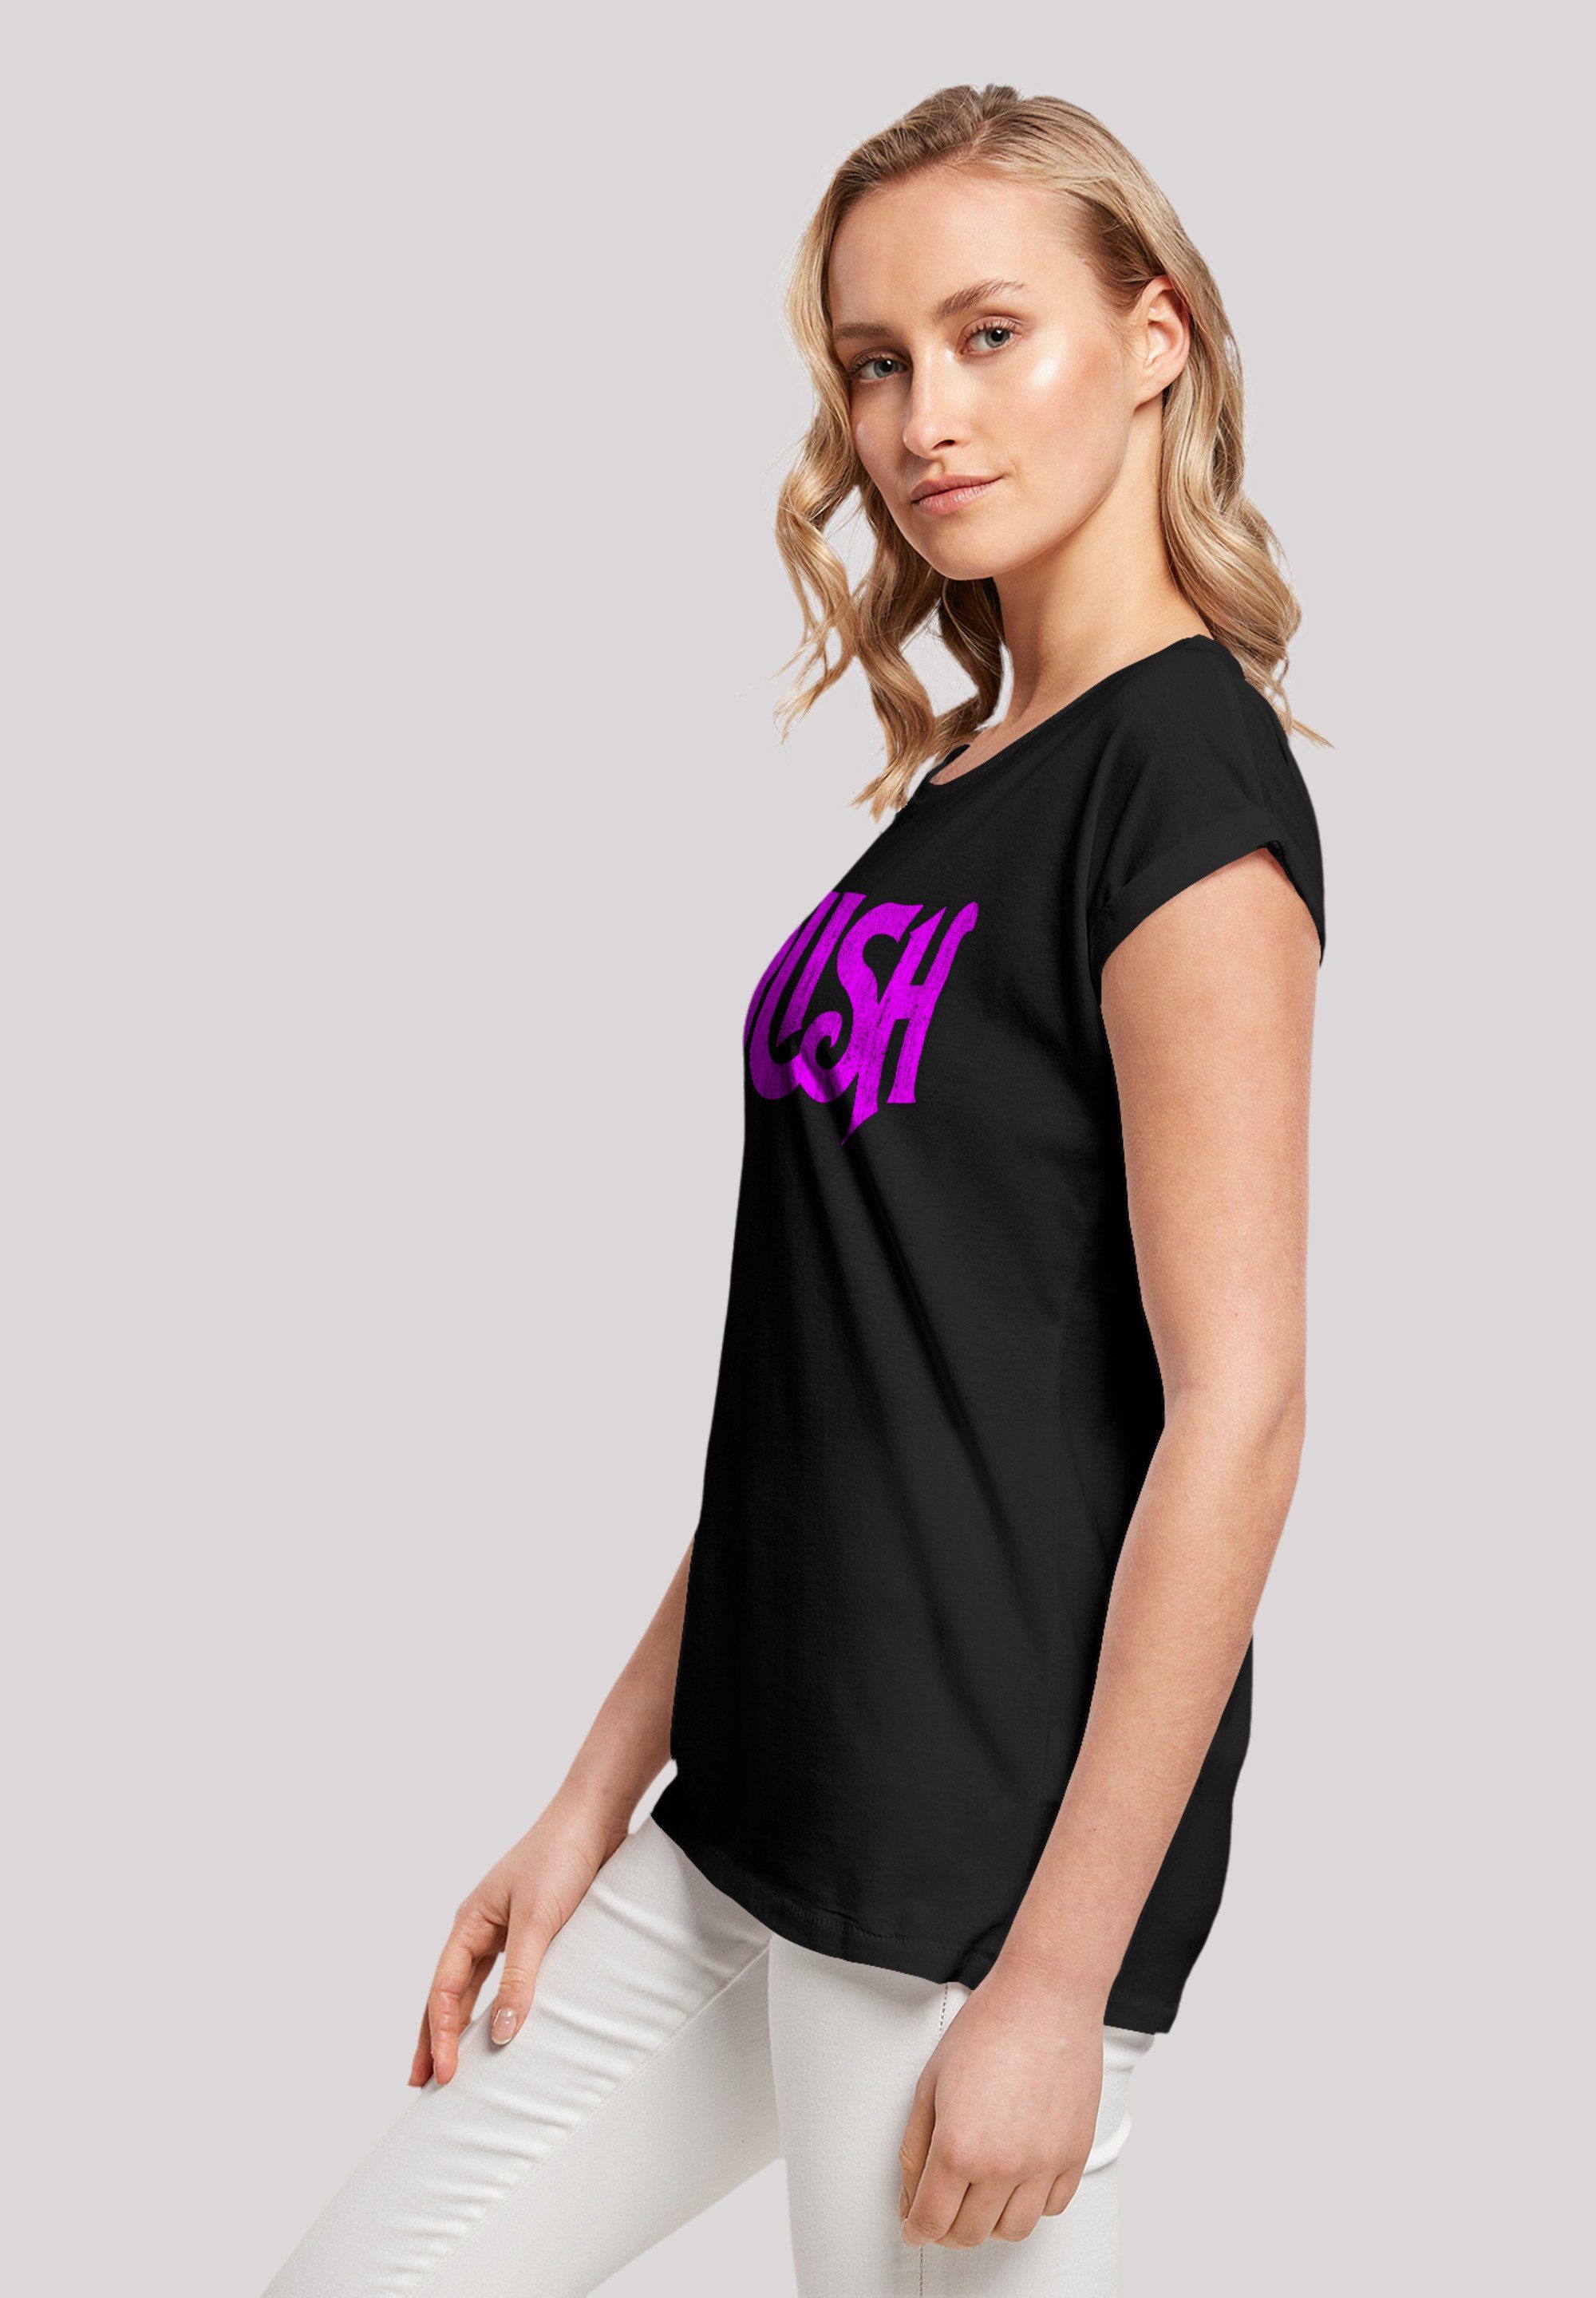 F4NT4STIC T-Shirt Rush Band Premium Logo Distressed Qualität Rock schwarz